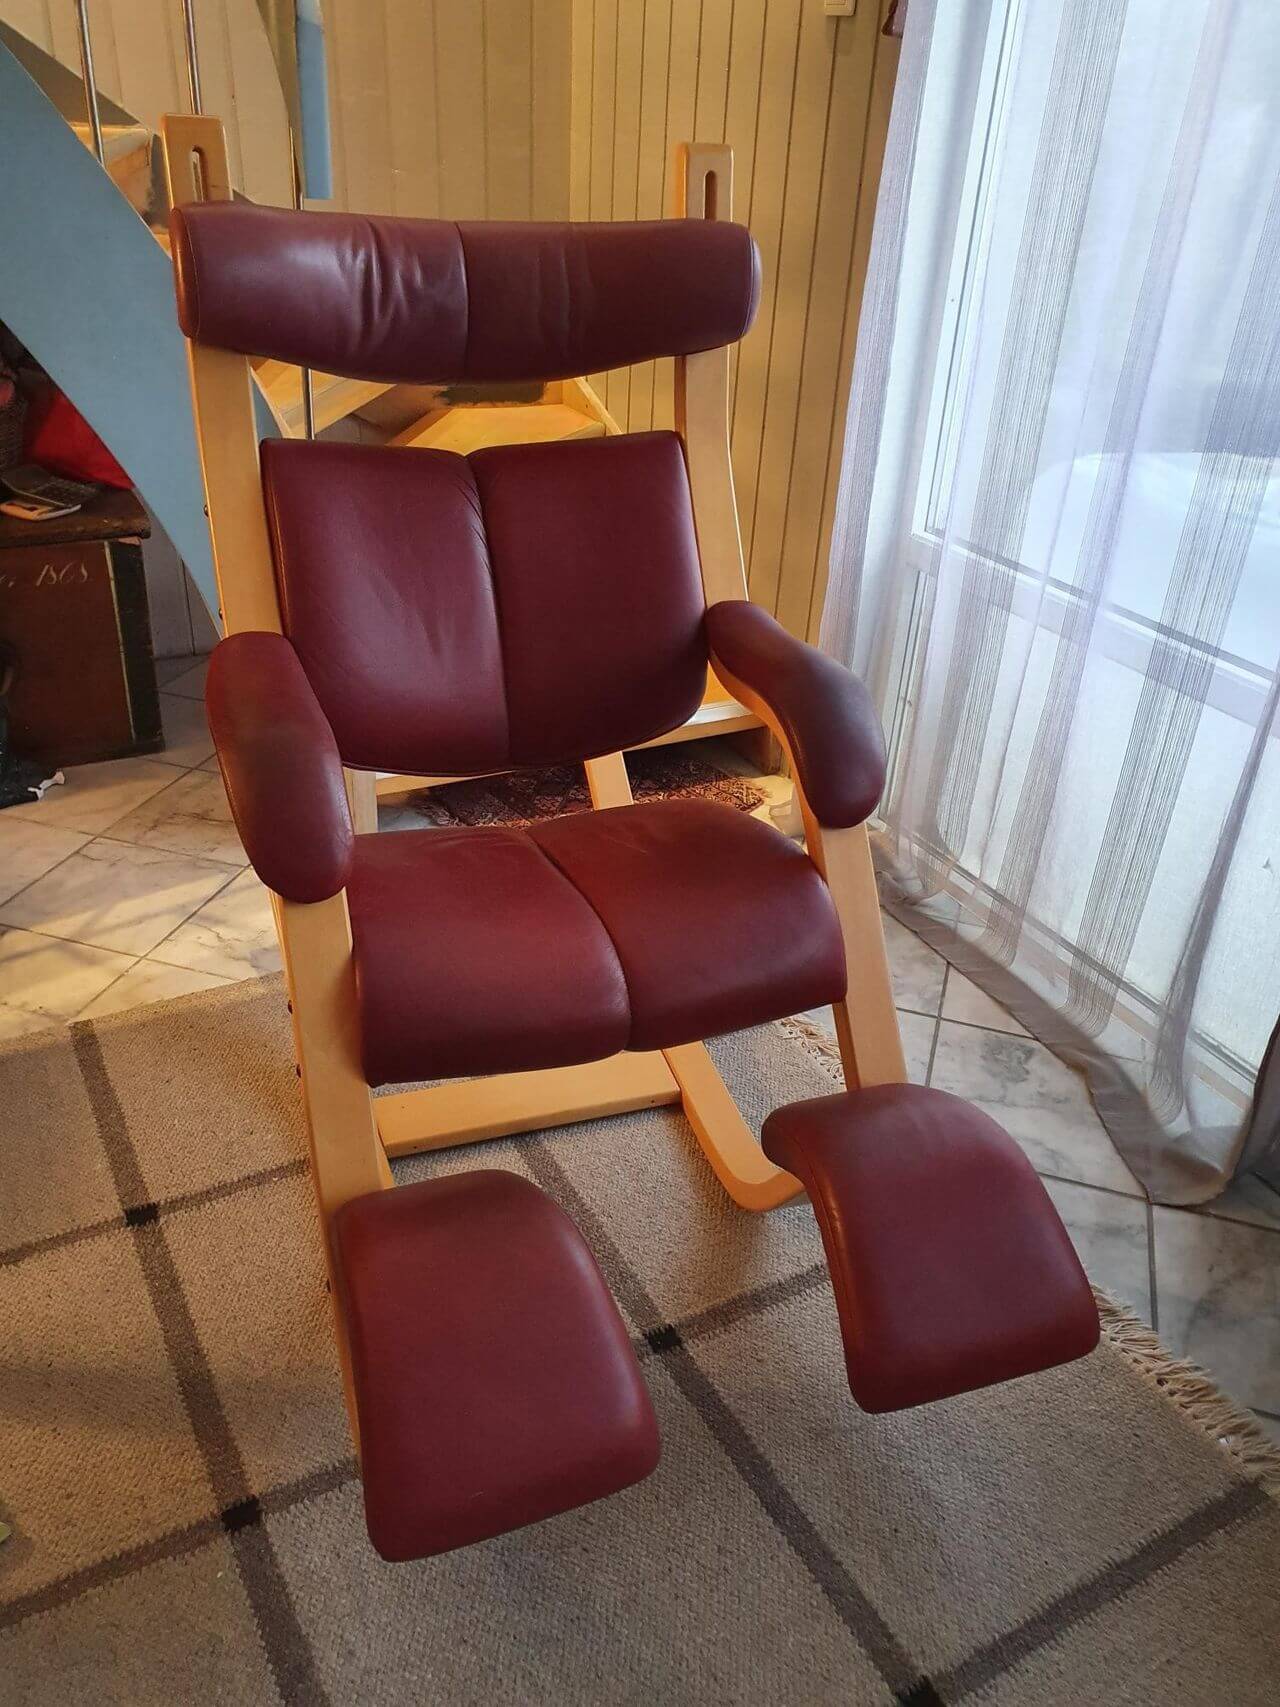 gravity balance chair